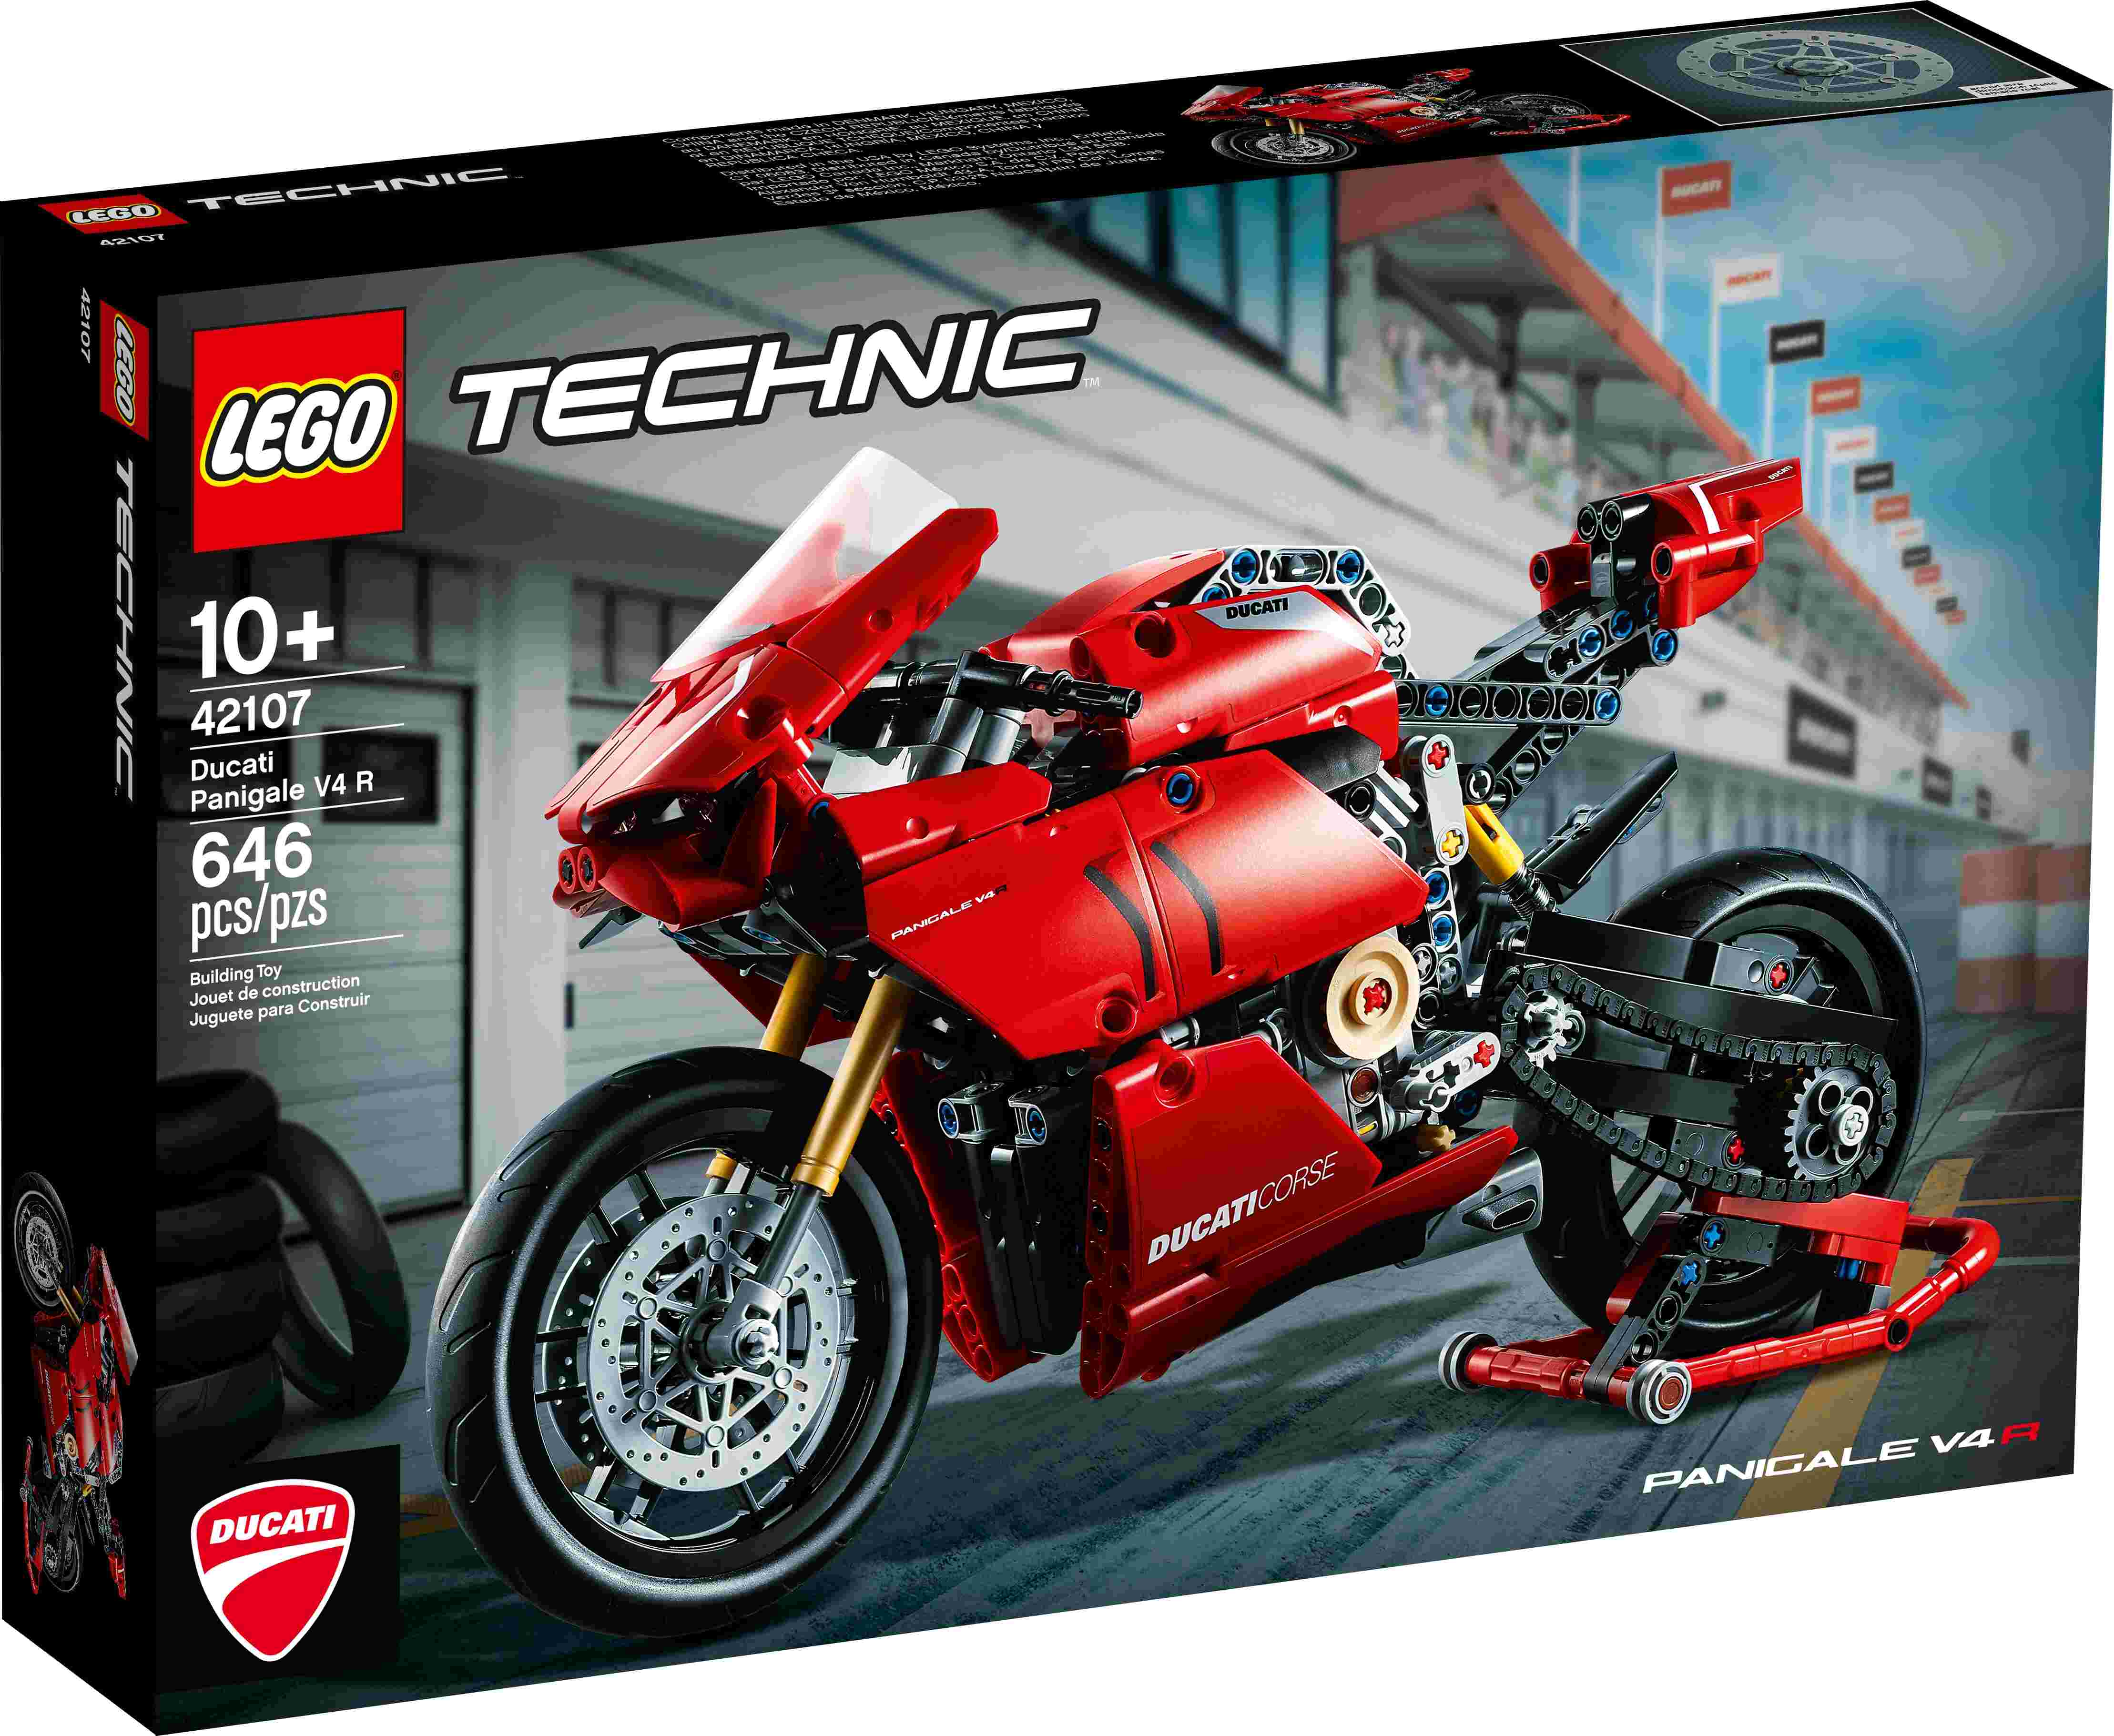 LEGO 42107 Technic Ducati Panigale V4 R, Motorrad mit faszinierenden Details